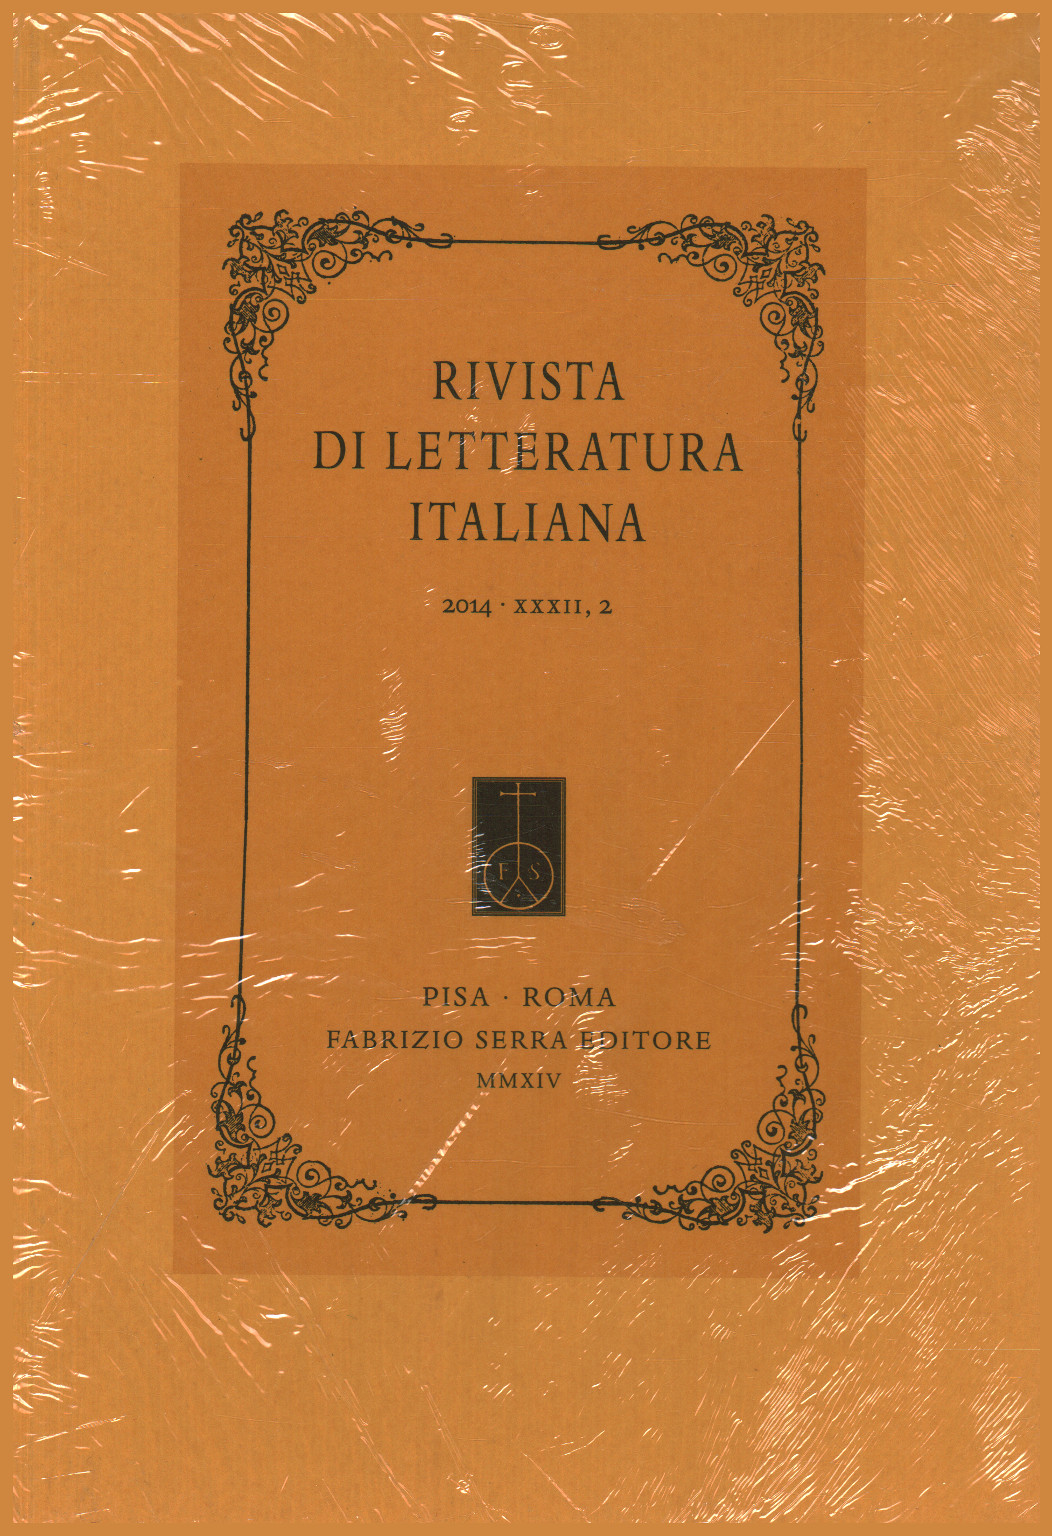 Journal of Italian literature 2014,XXXII,2, s.a.